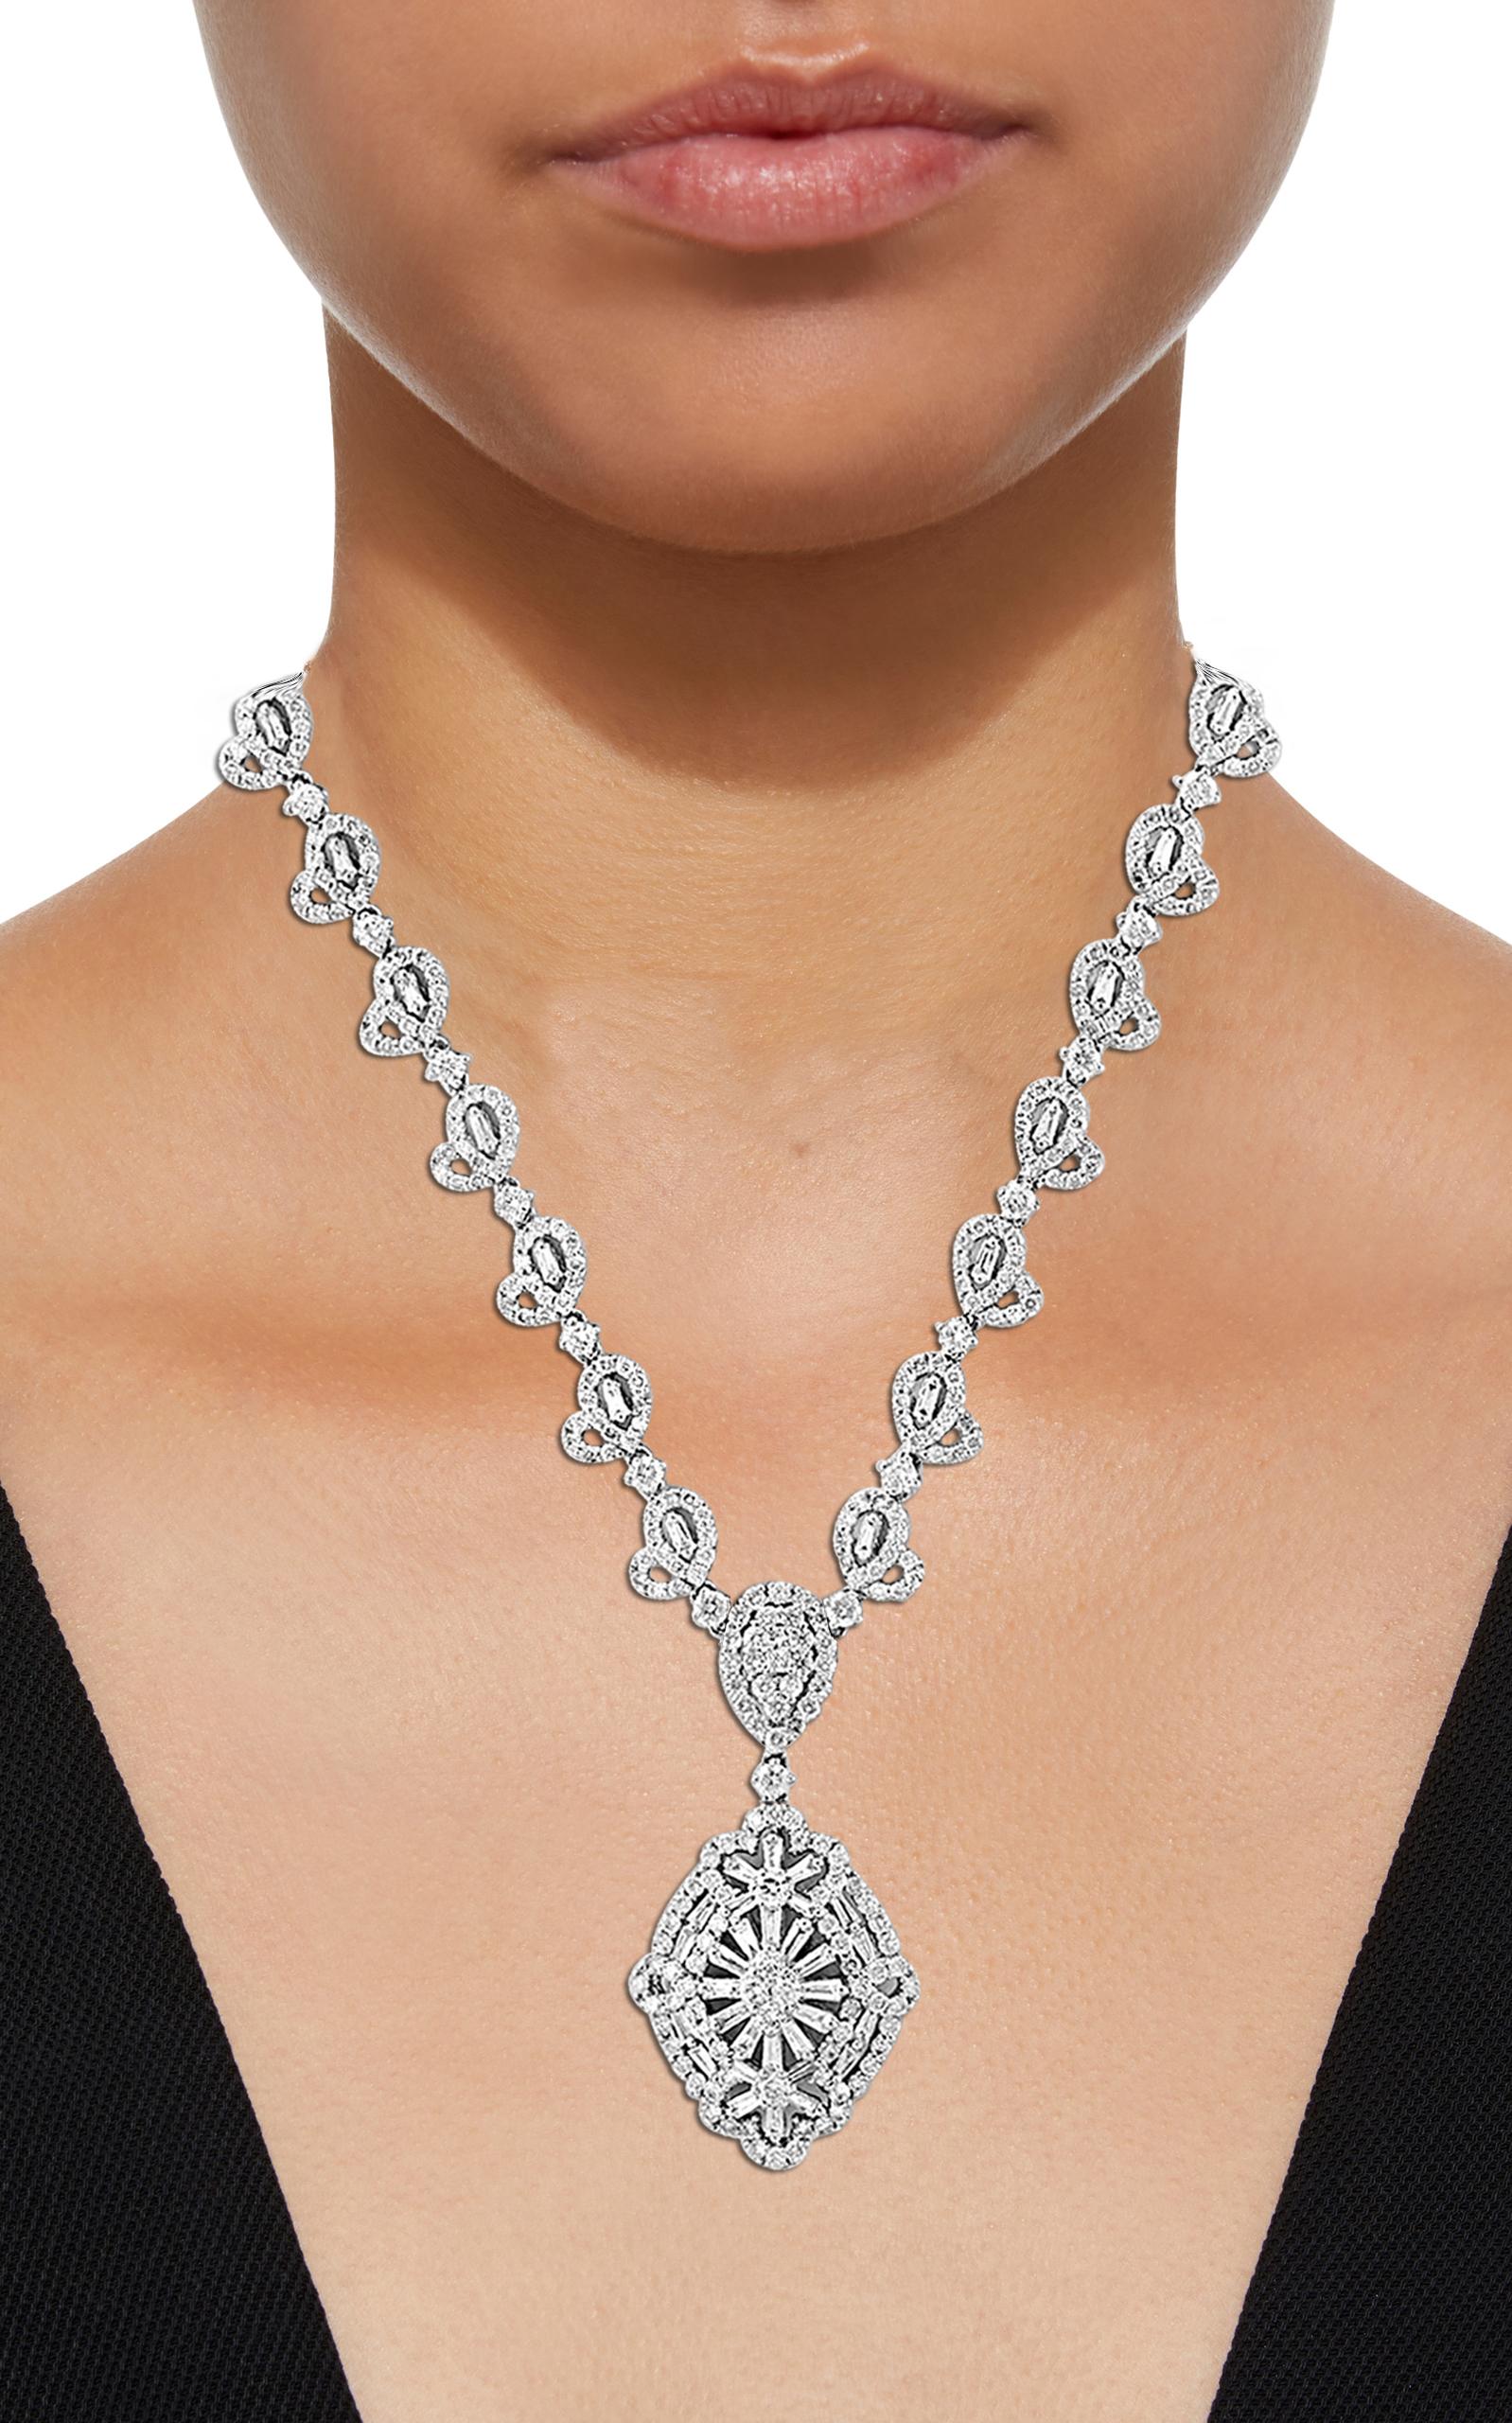 Women's 11.4 Carat Diamond Necklace in 18 Karat White Gold Bridal Brand New